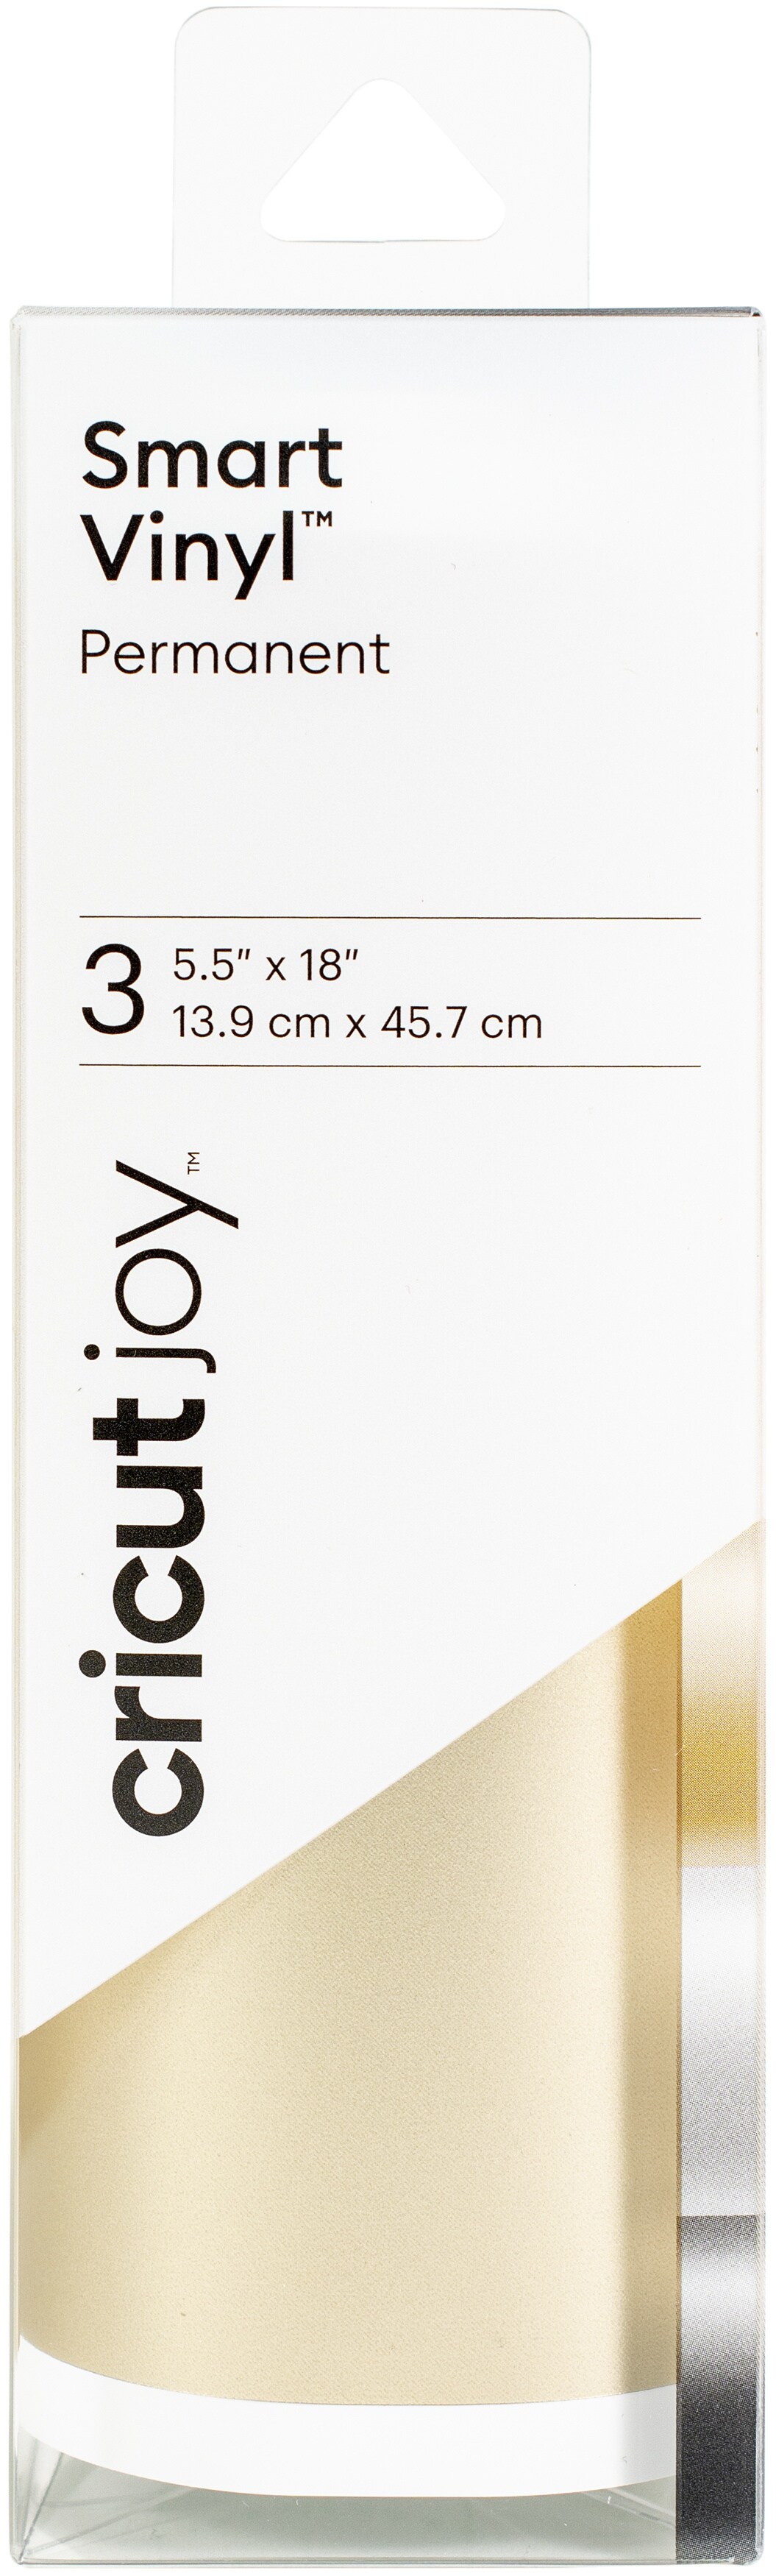 2008034)Cricut Joy Smart Vinyl Permanent Elegance Sampler